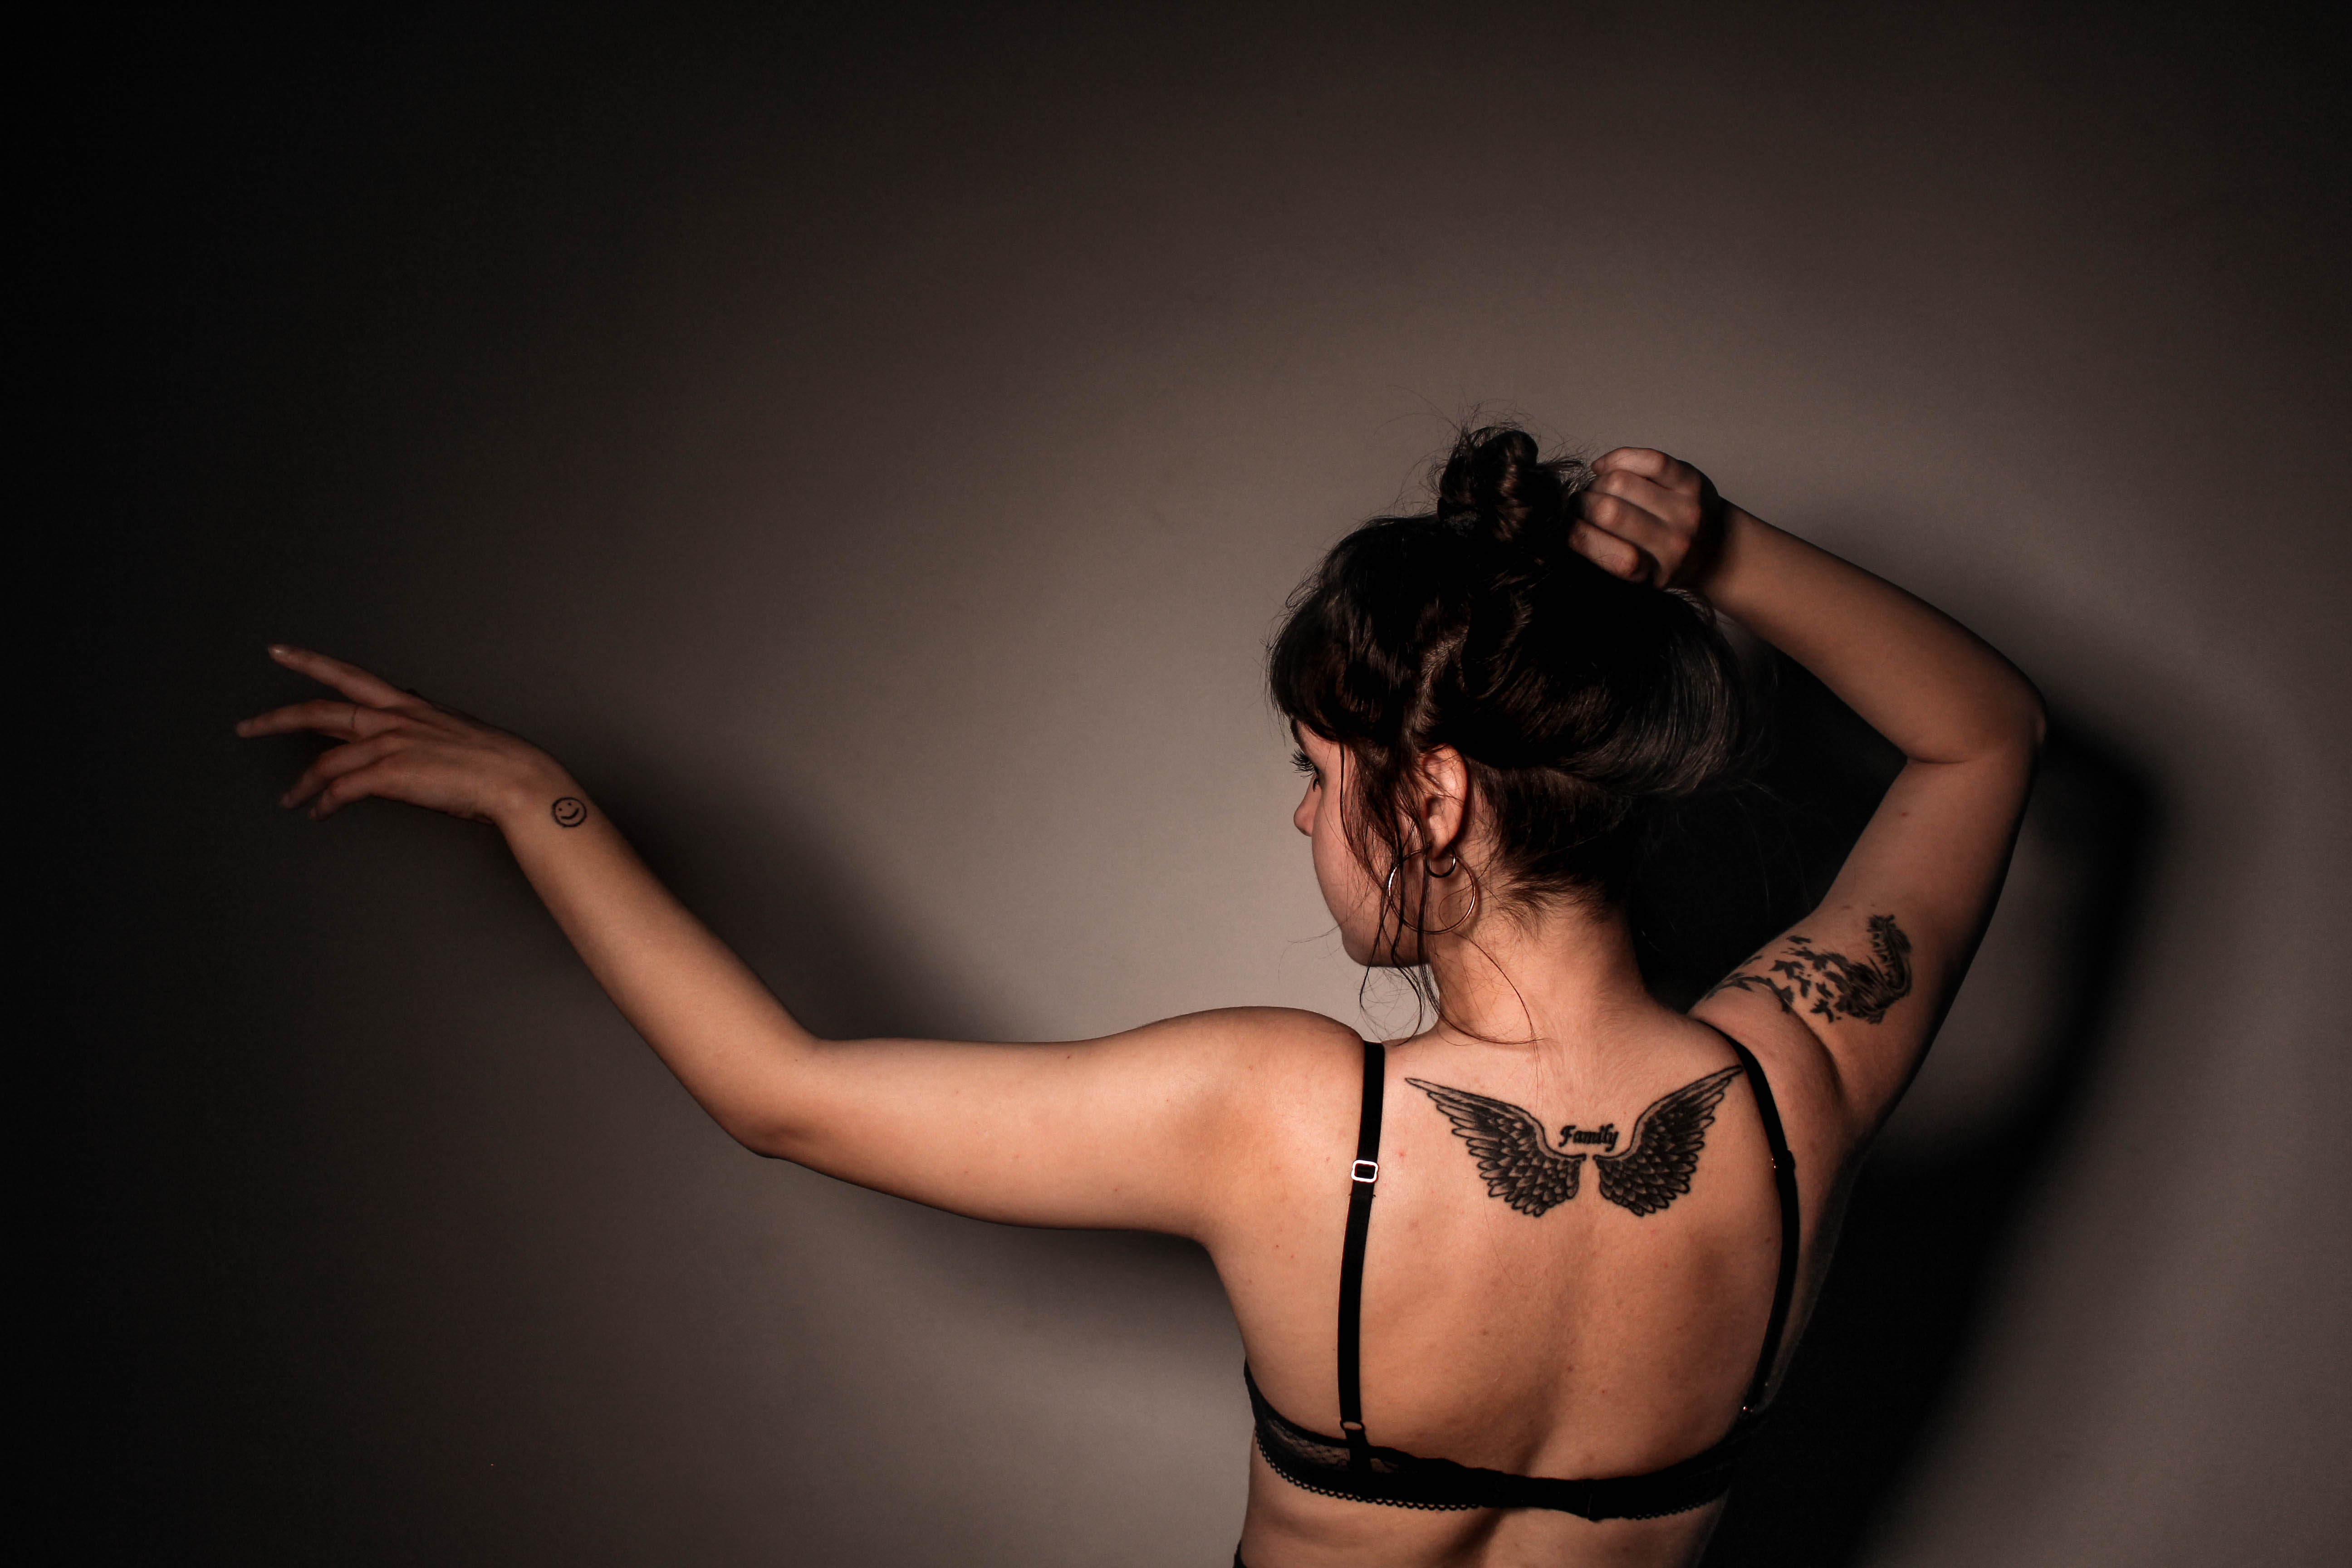 Woman in eagle tattoo in back wearing black bra photo